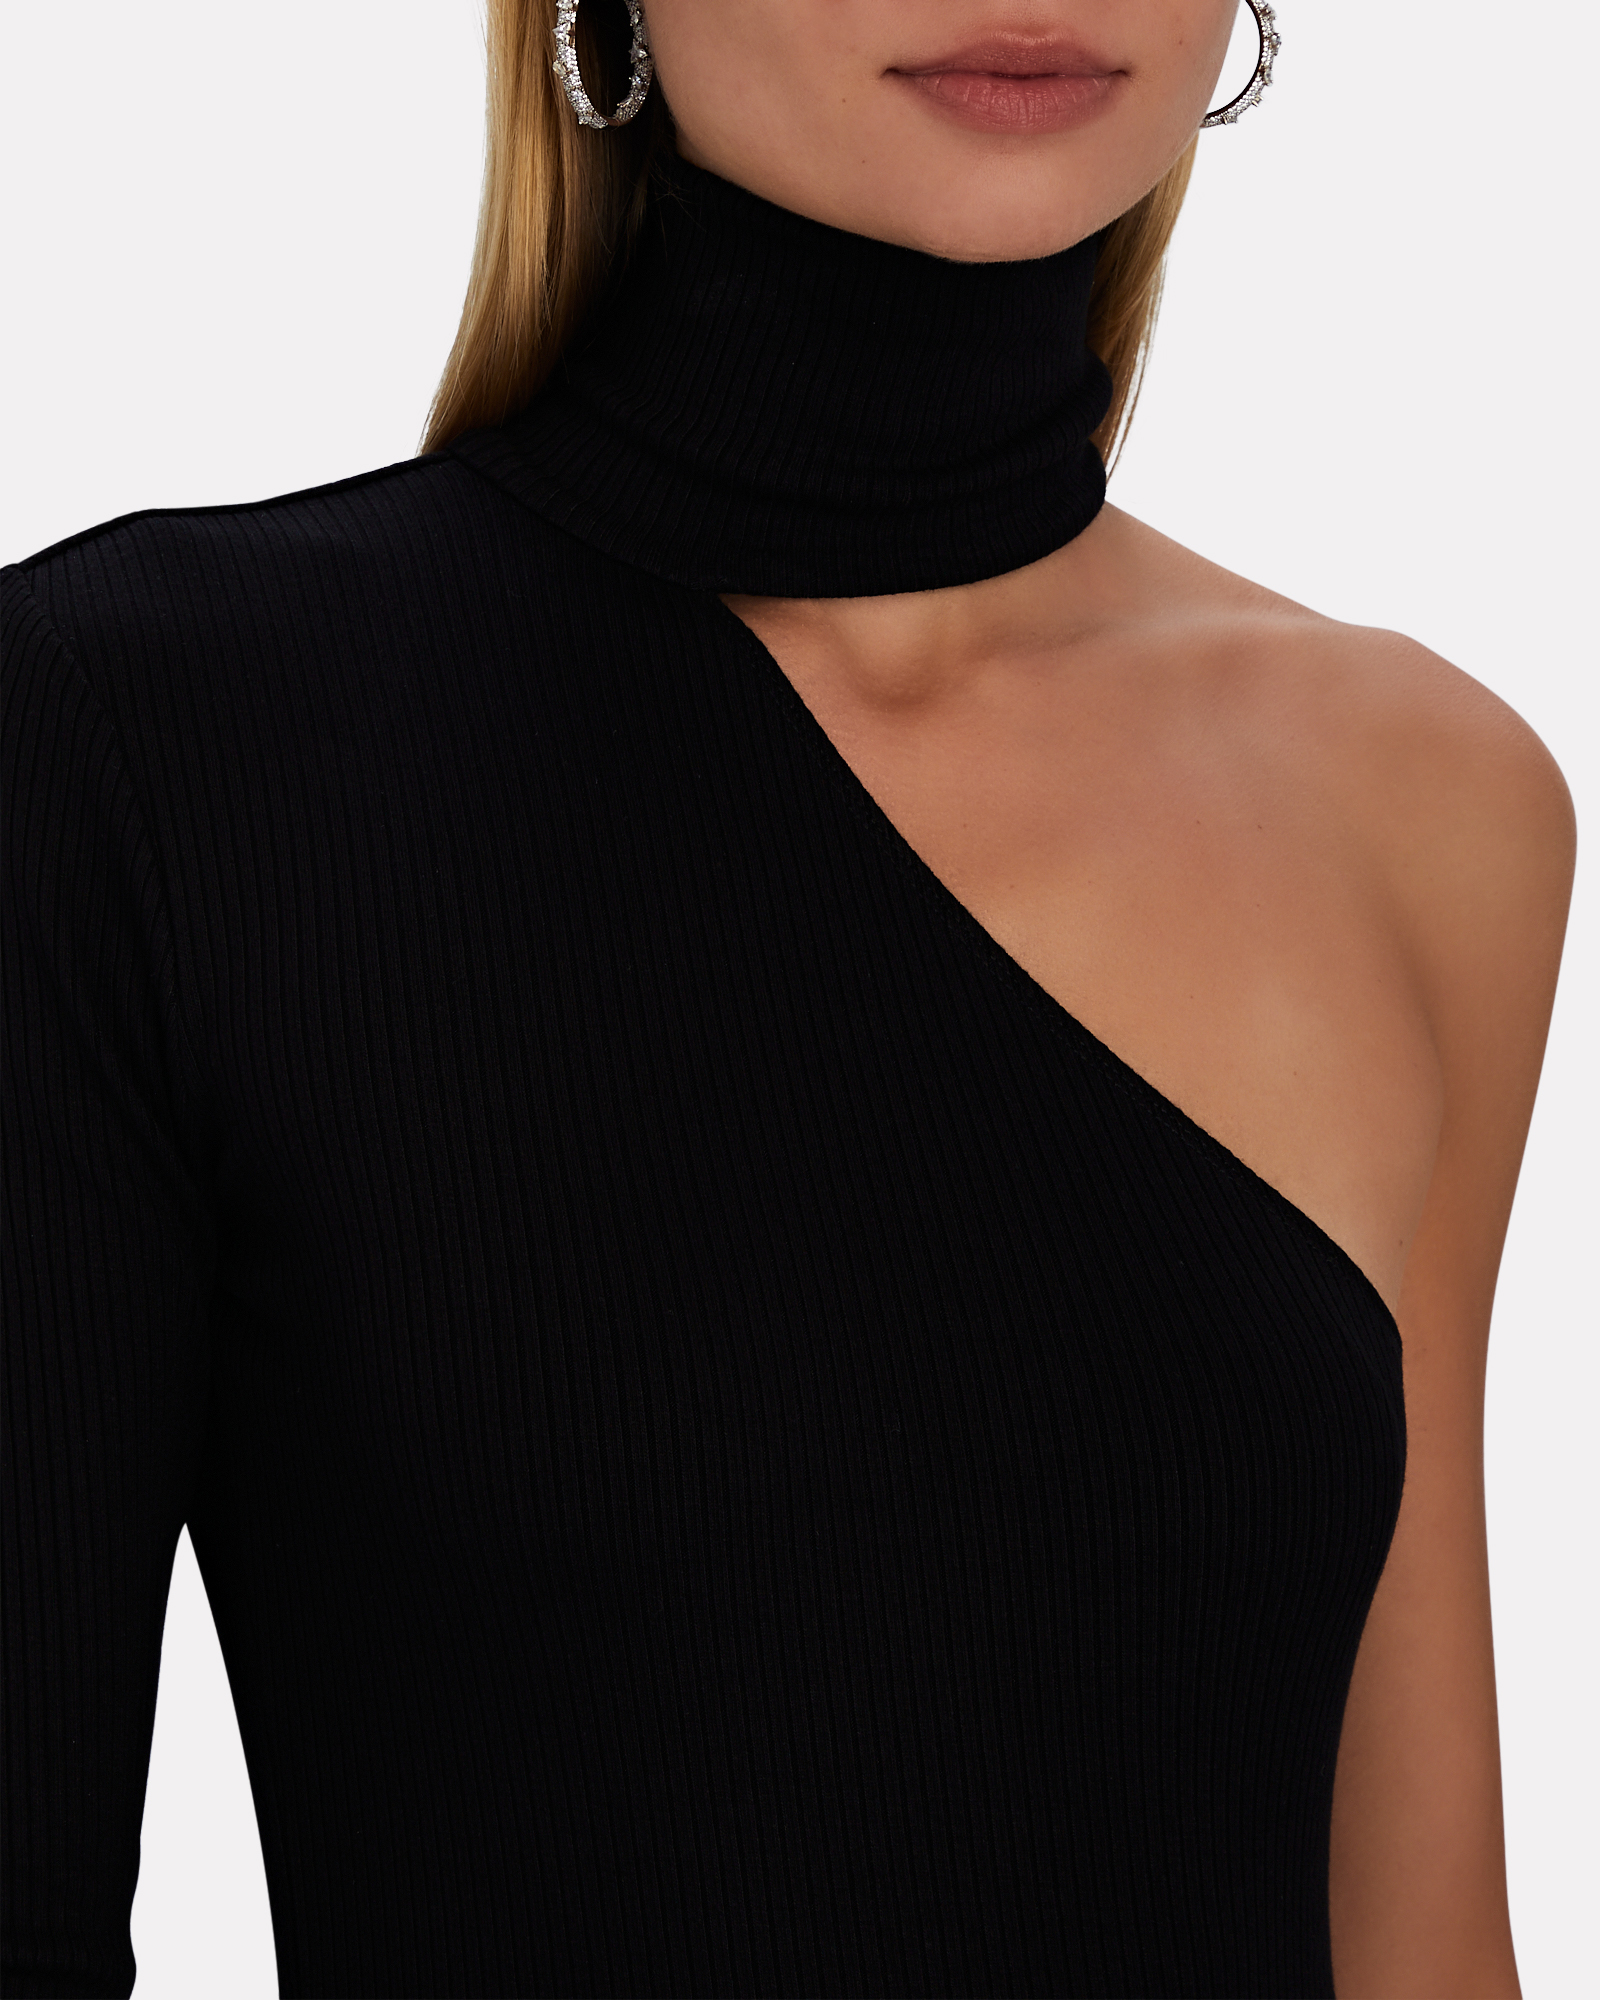 The Range Alloy Carved Turtleneck Maxi Dress in black | INTERMIX®